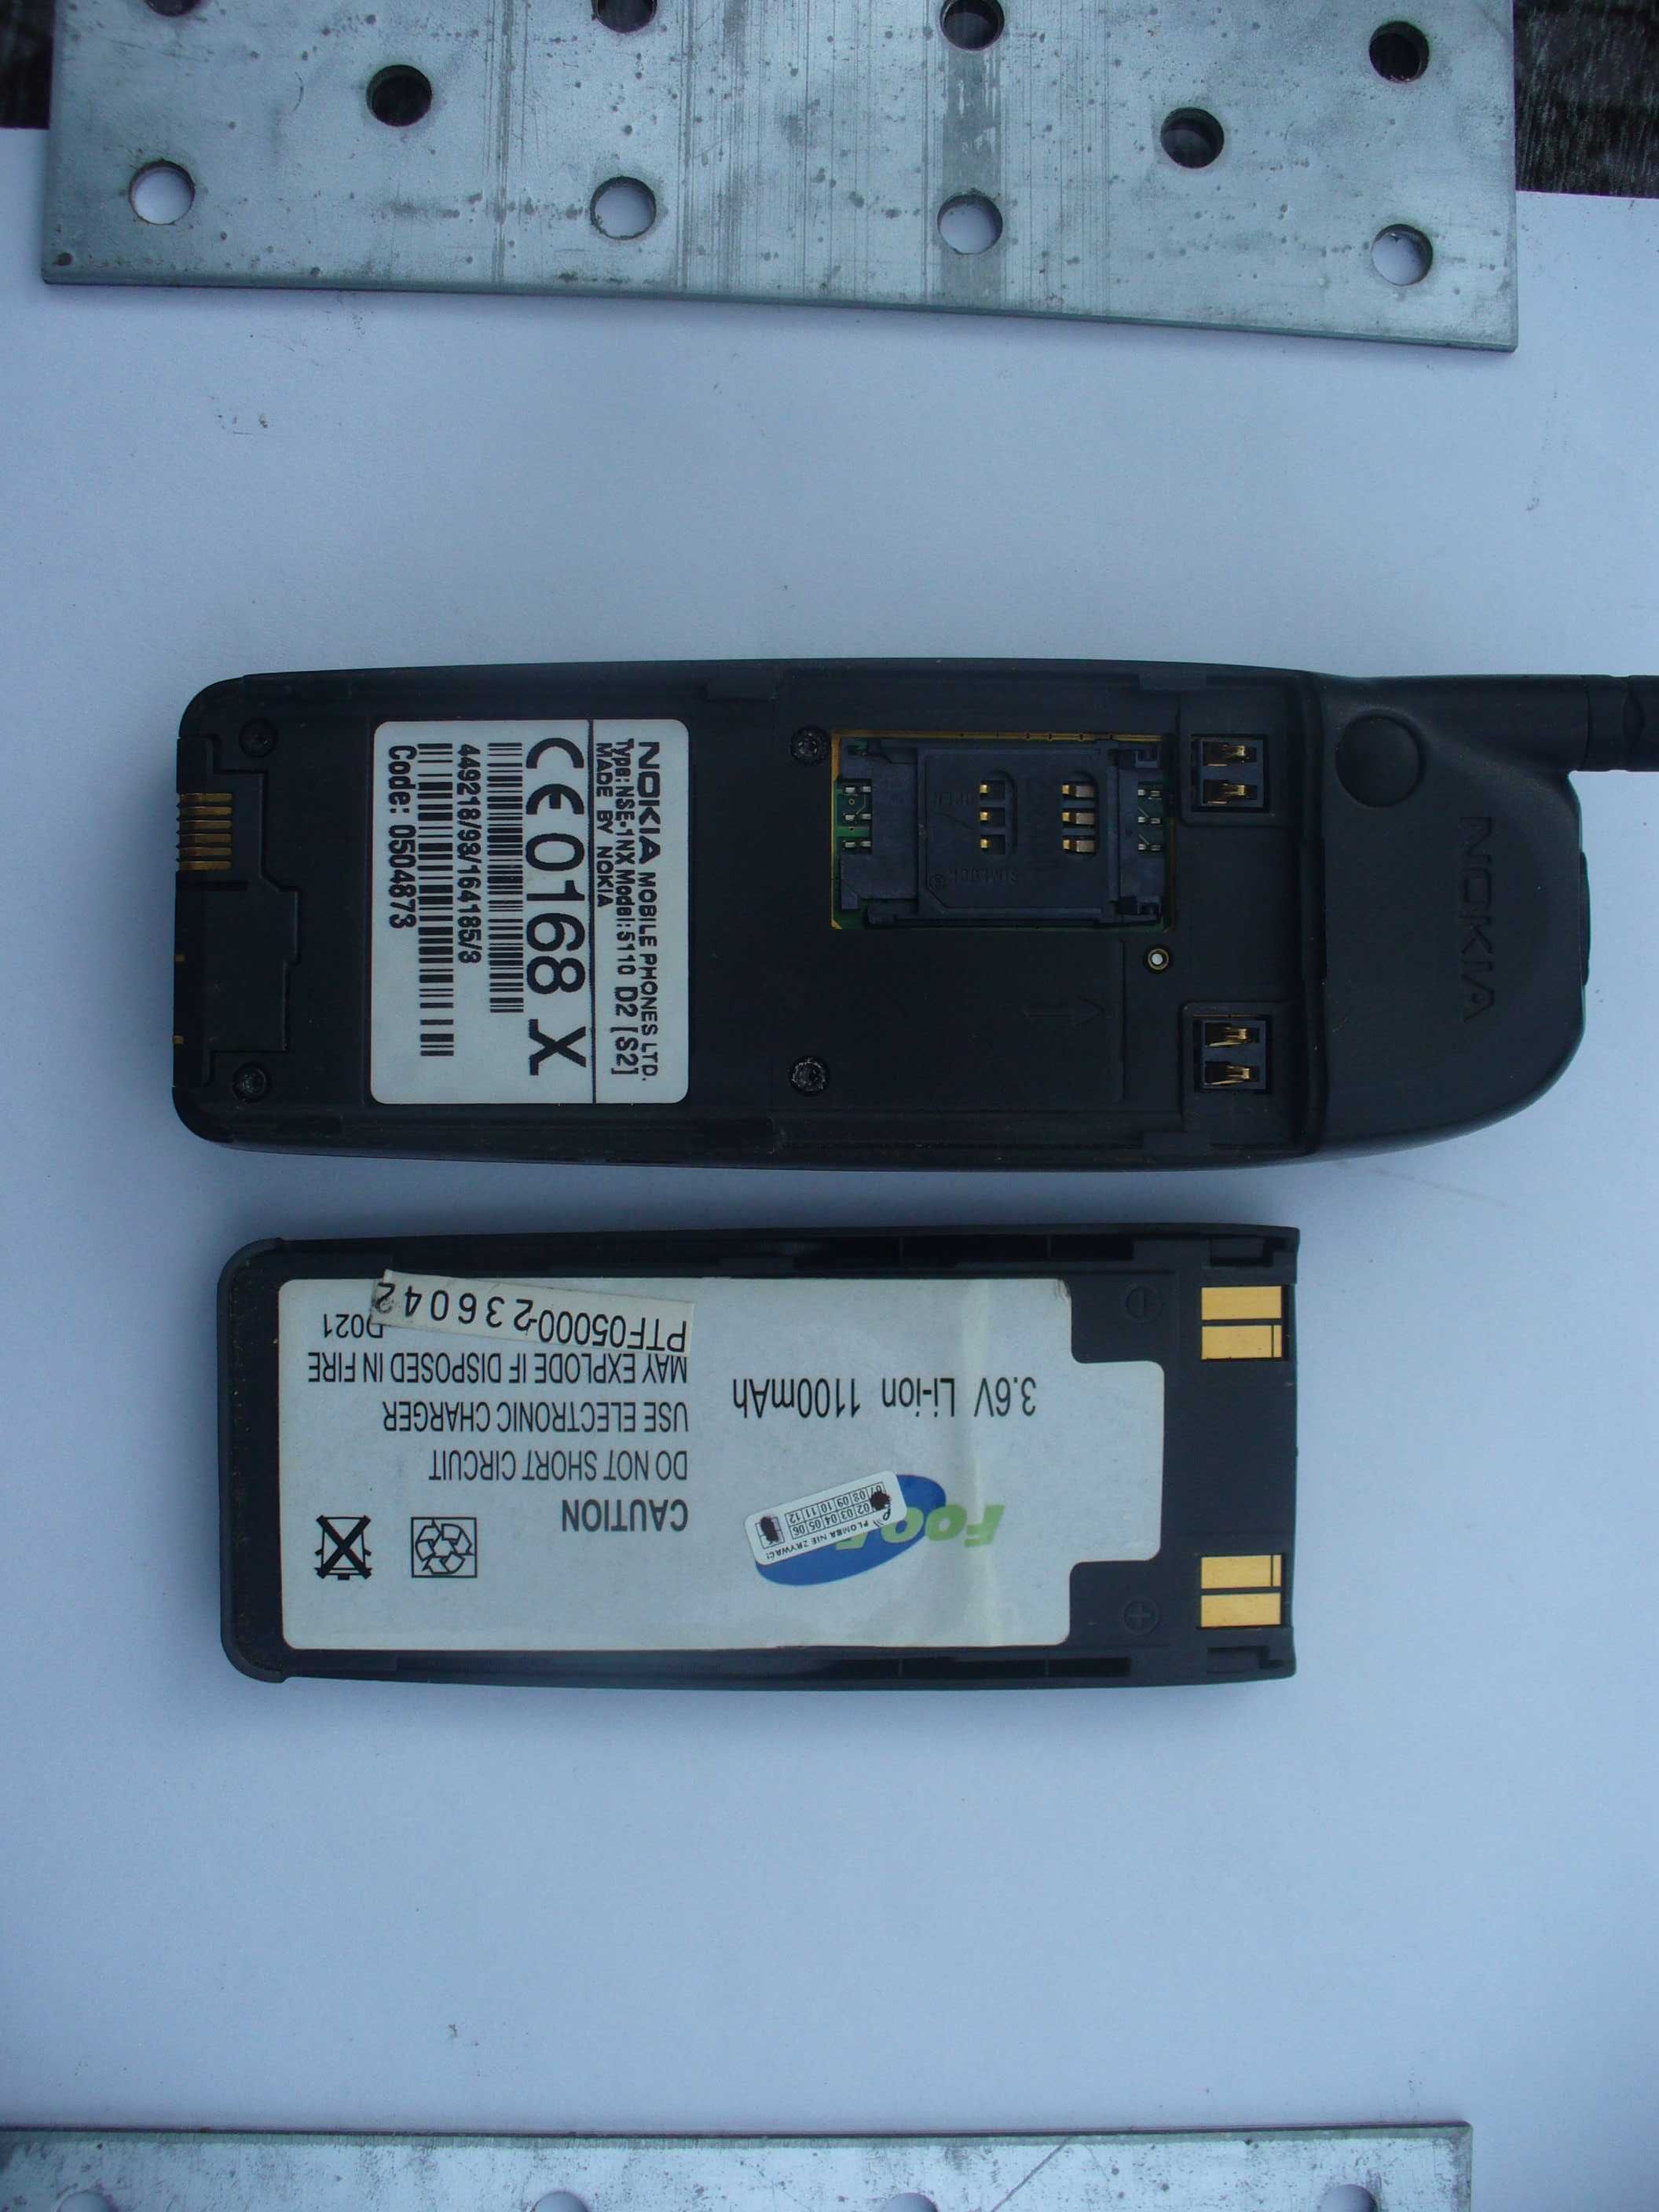 Kultowy telefon Nokia 5110